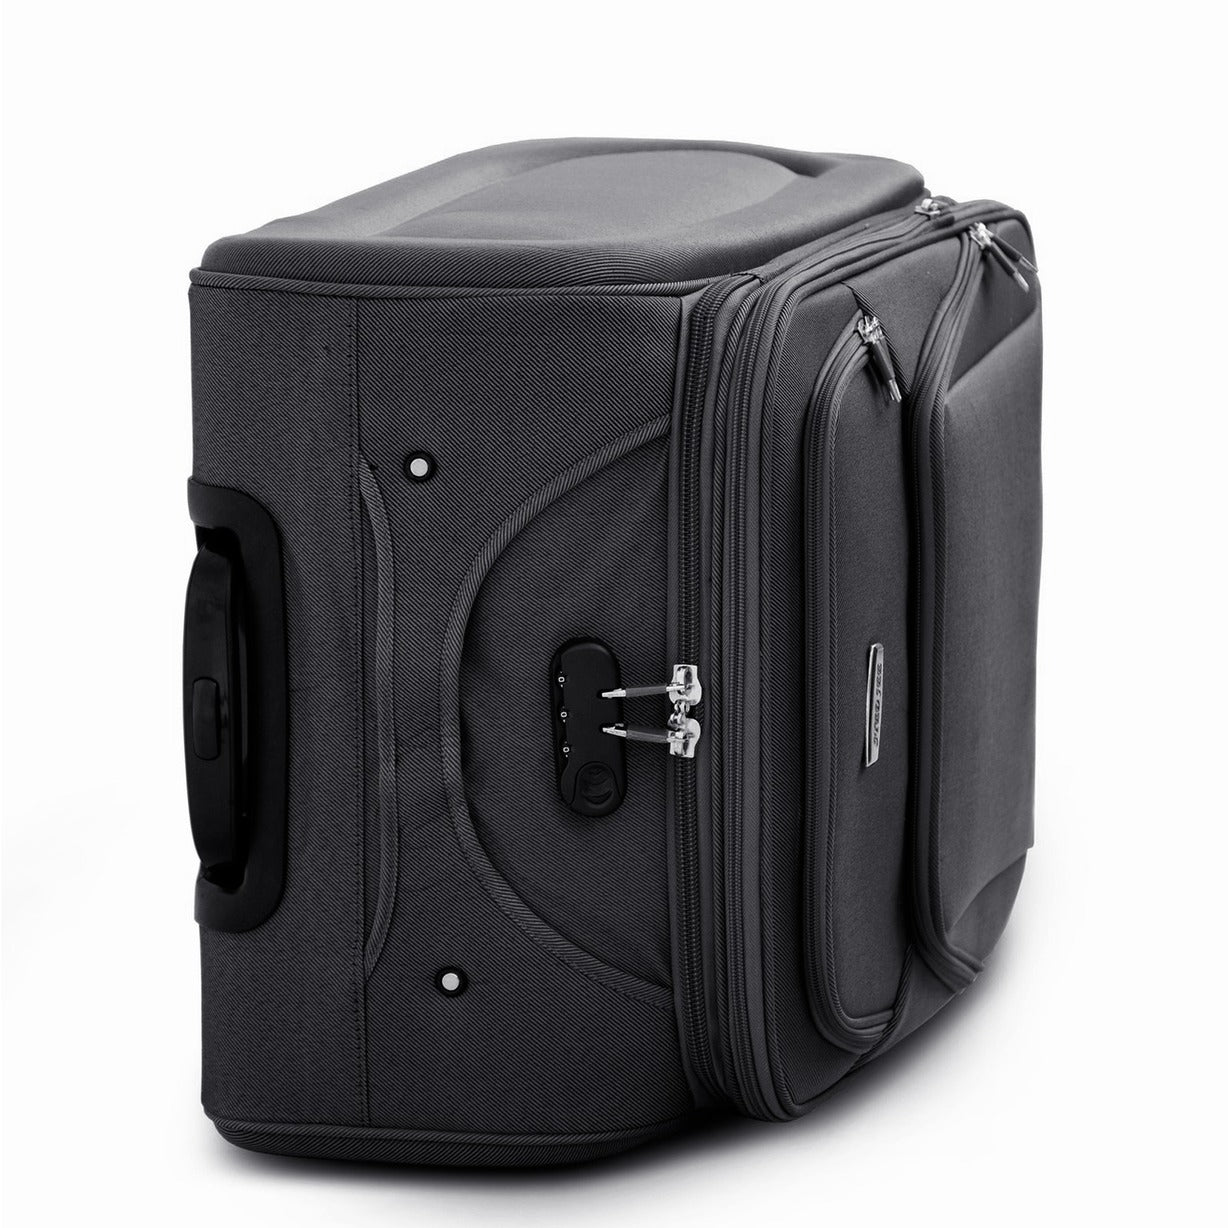 32" Black Colour SJ JIAN 4 Wheel Luggage Lightweight Soft Material Trolley Bag Zaappy.com